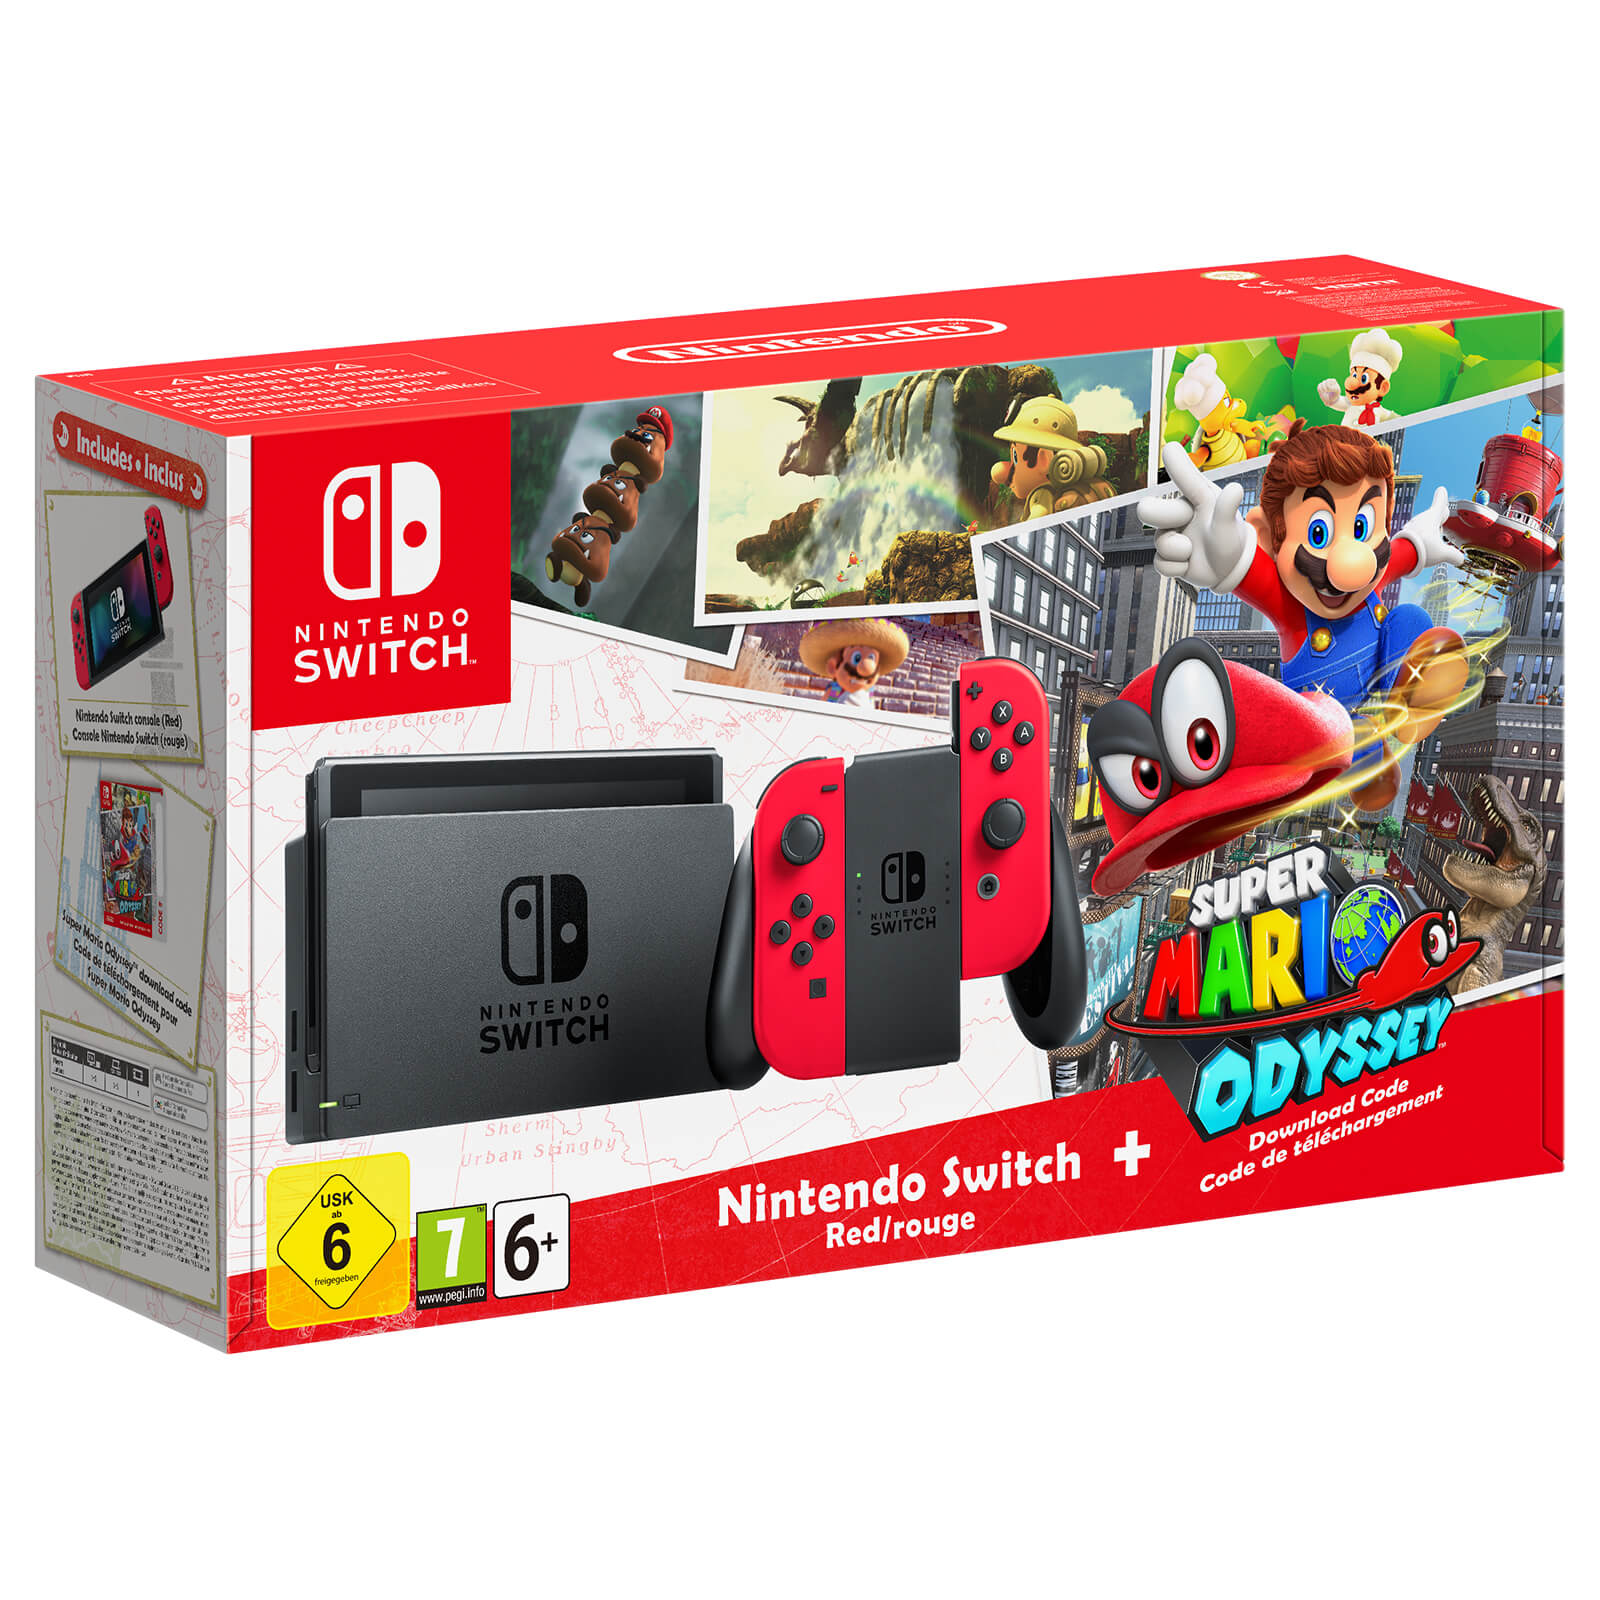 Nintendo Switch Red Joy-Con Limited Super Mario Odyssey Edition